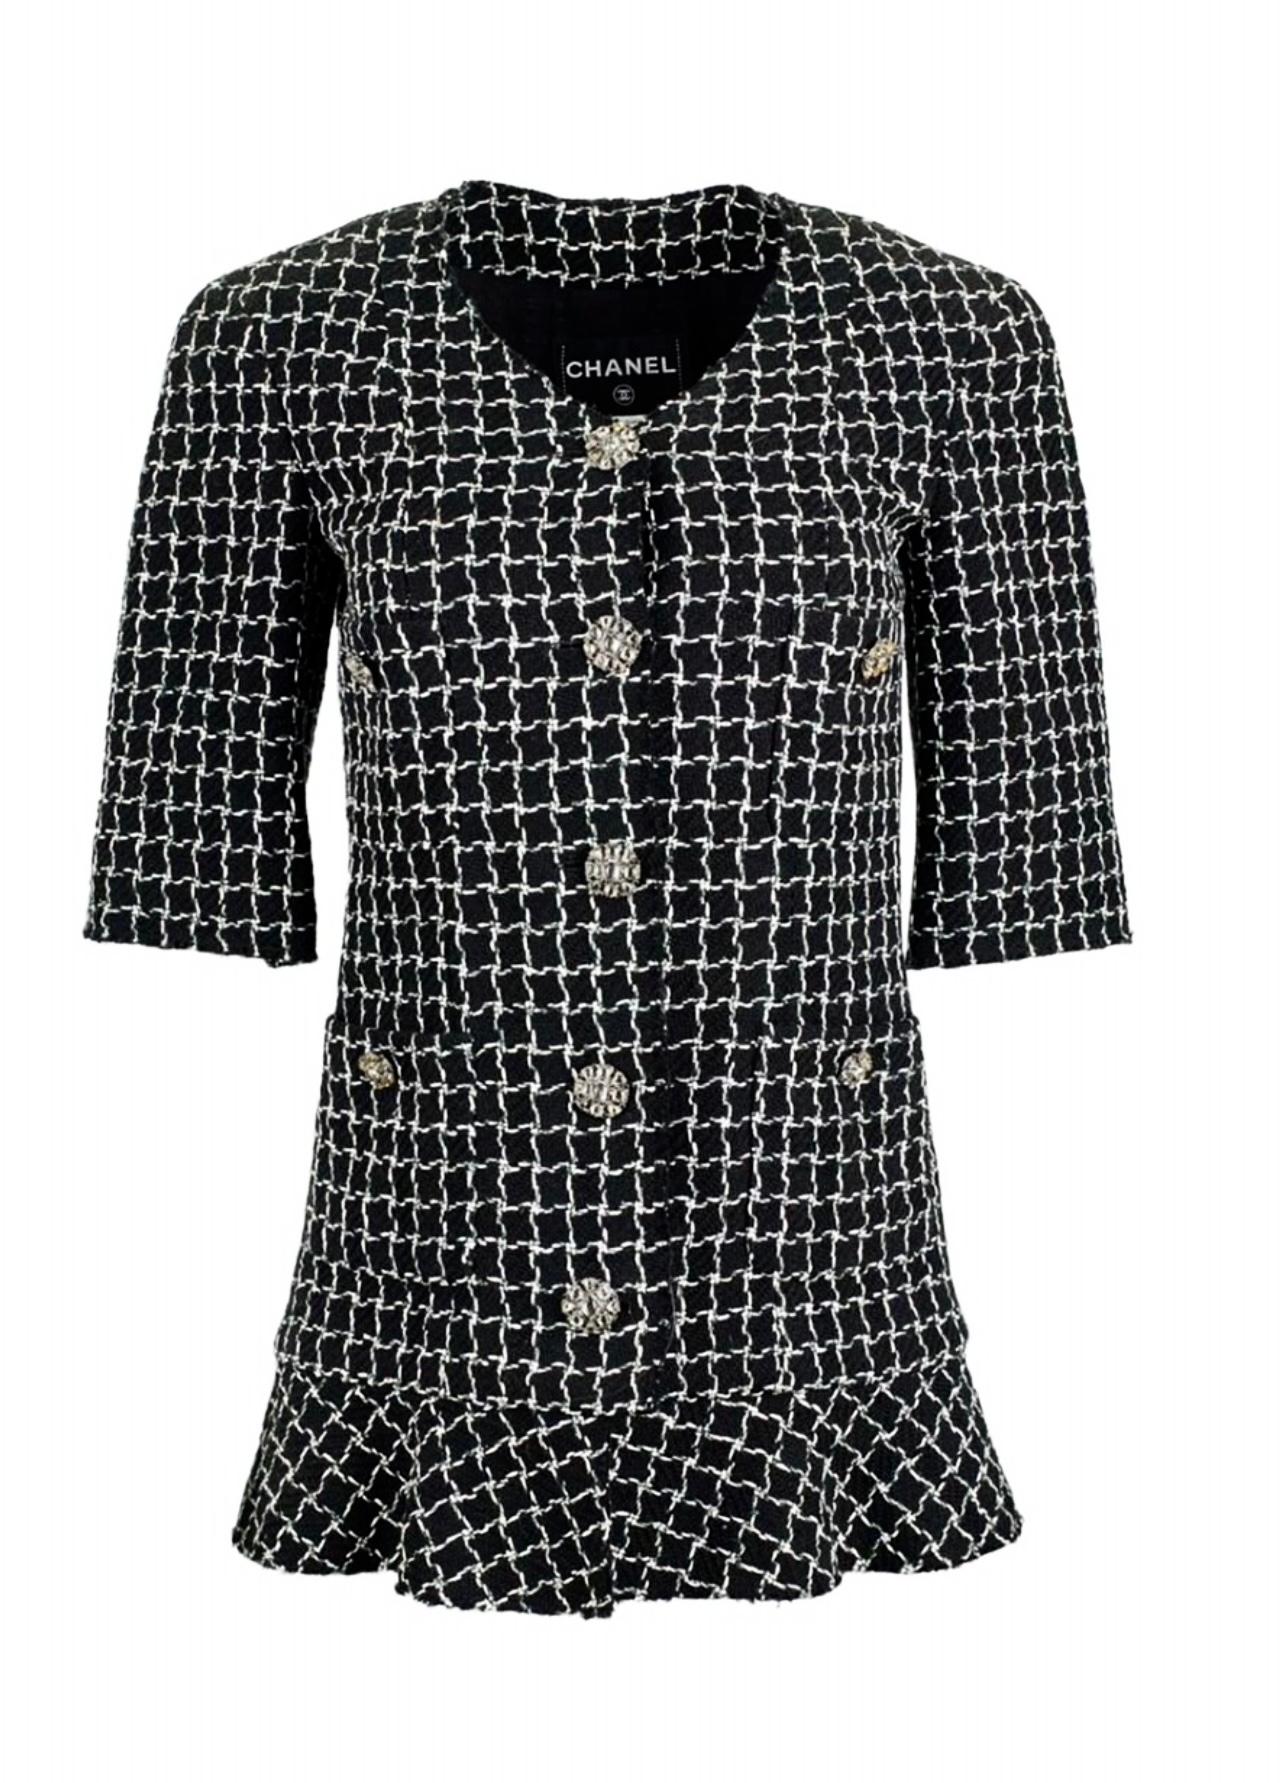 Women's or Men's Chanel CC Jewel Buttons Black Tweed Jacket